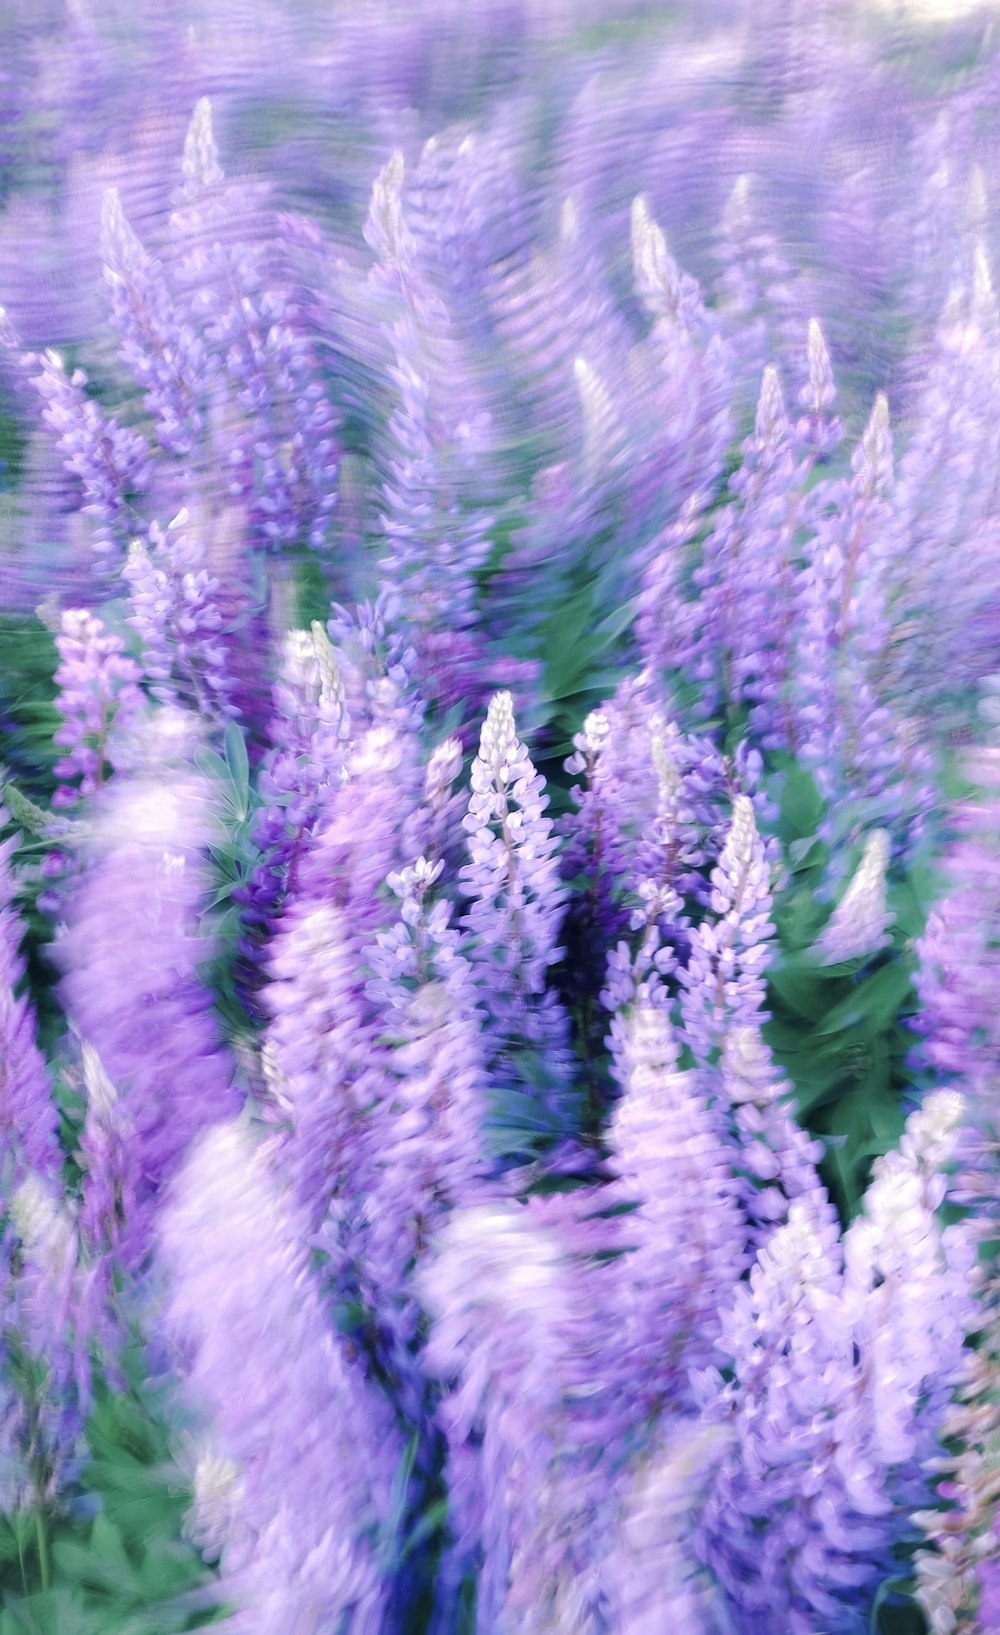 a blurry photo of purple flowers in a field